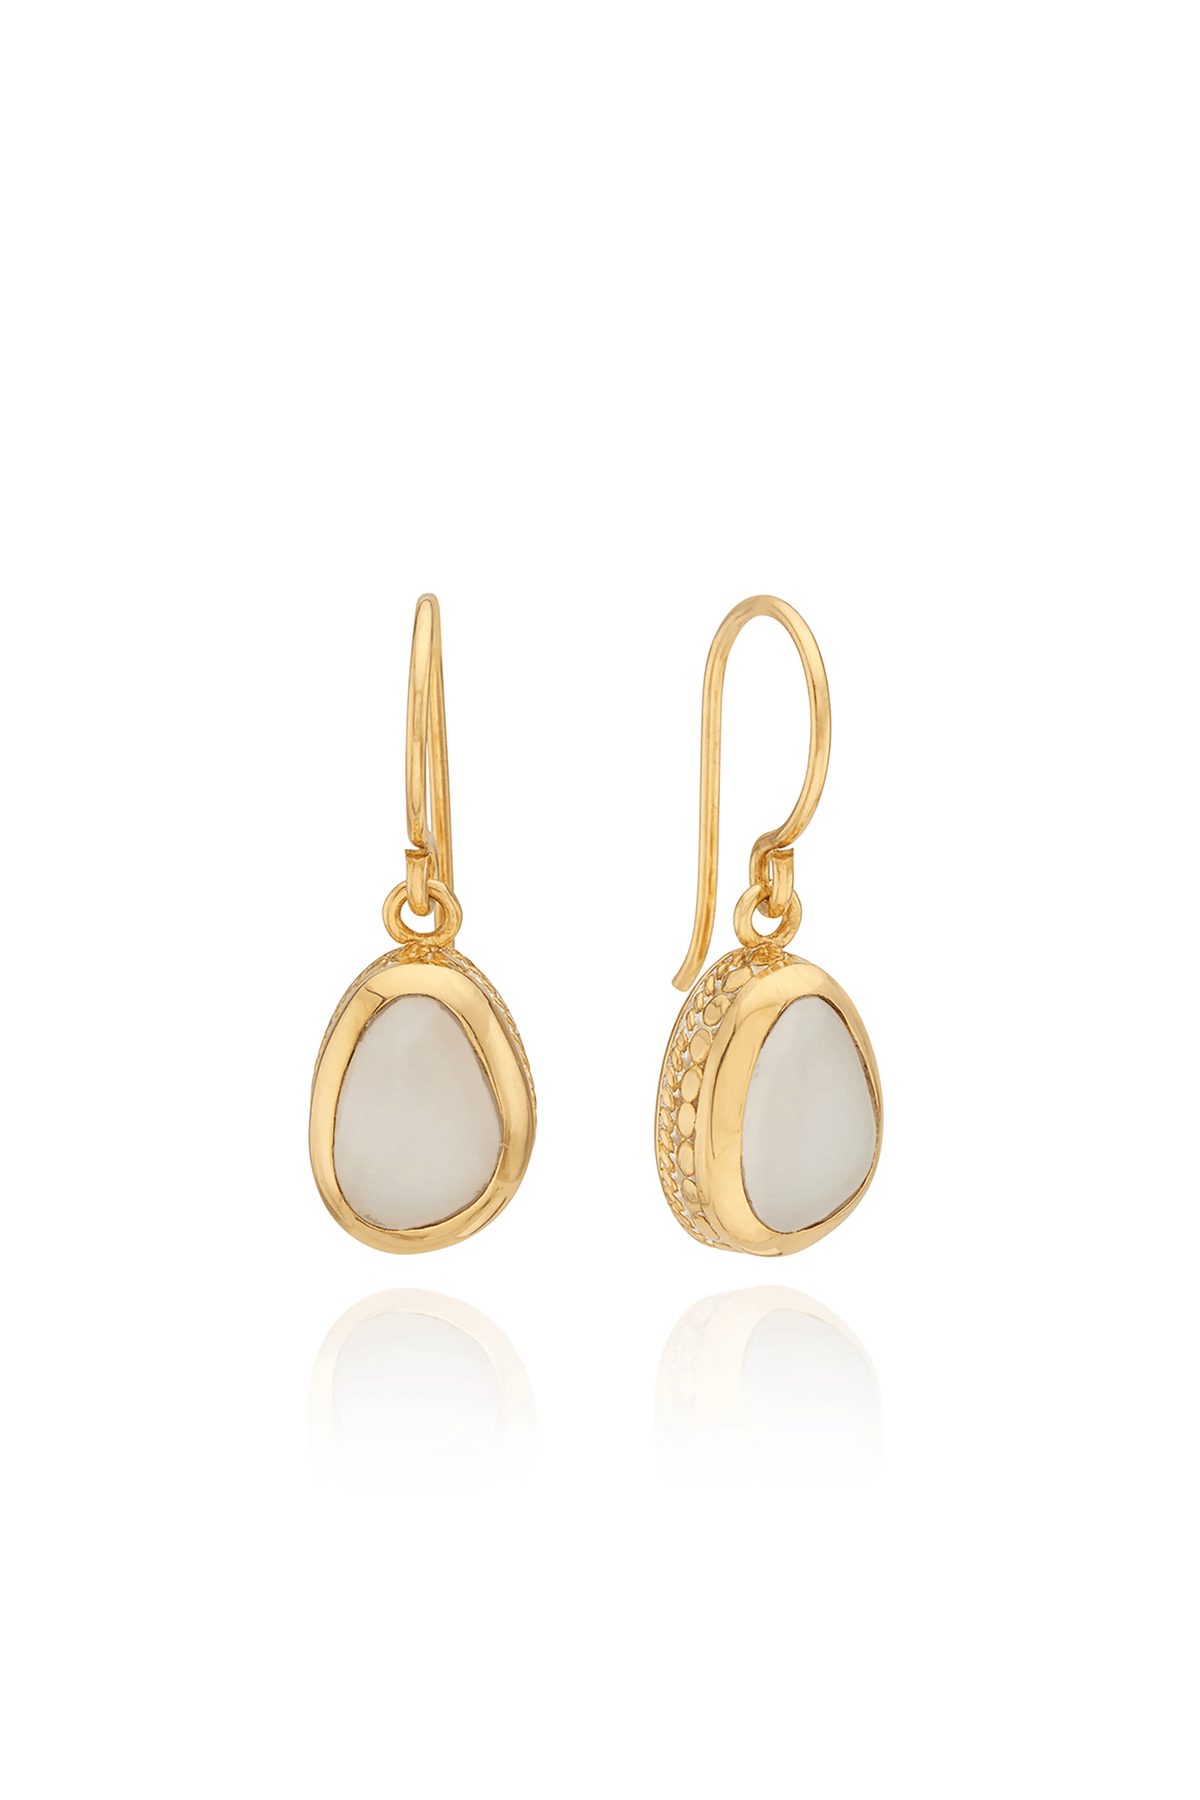 Anna Beck Moonstone asymmetrical drop earrings - gold/white moonstone